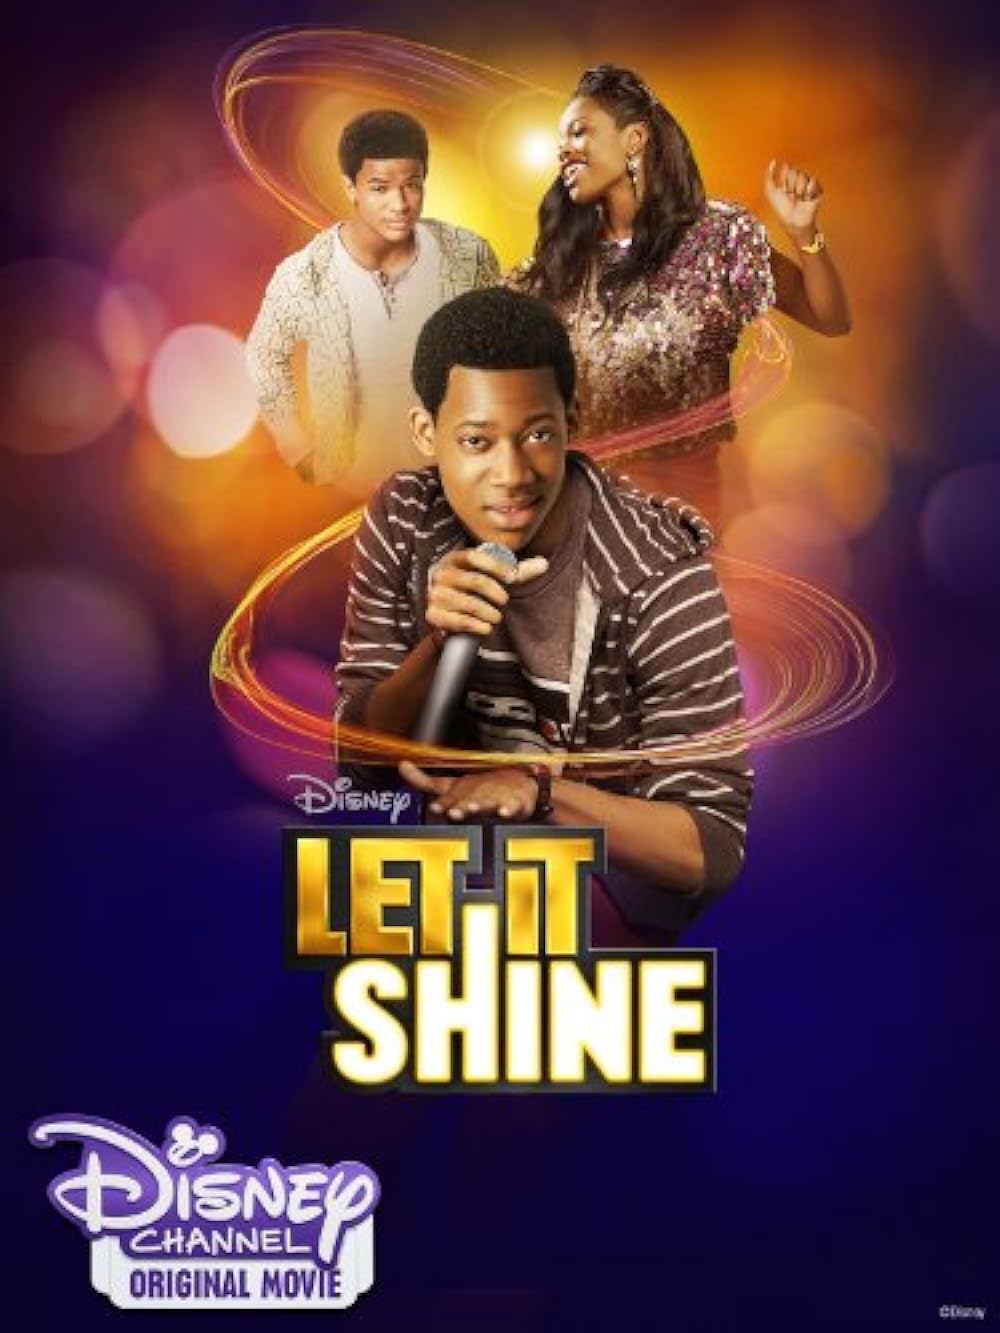 FULL MOVIE: Let It Shine (2012)